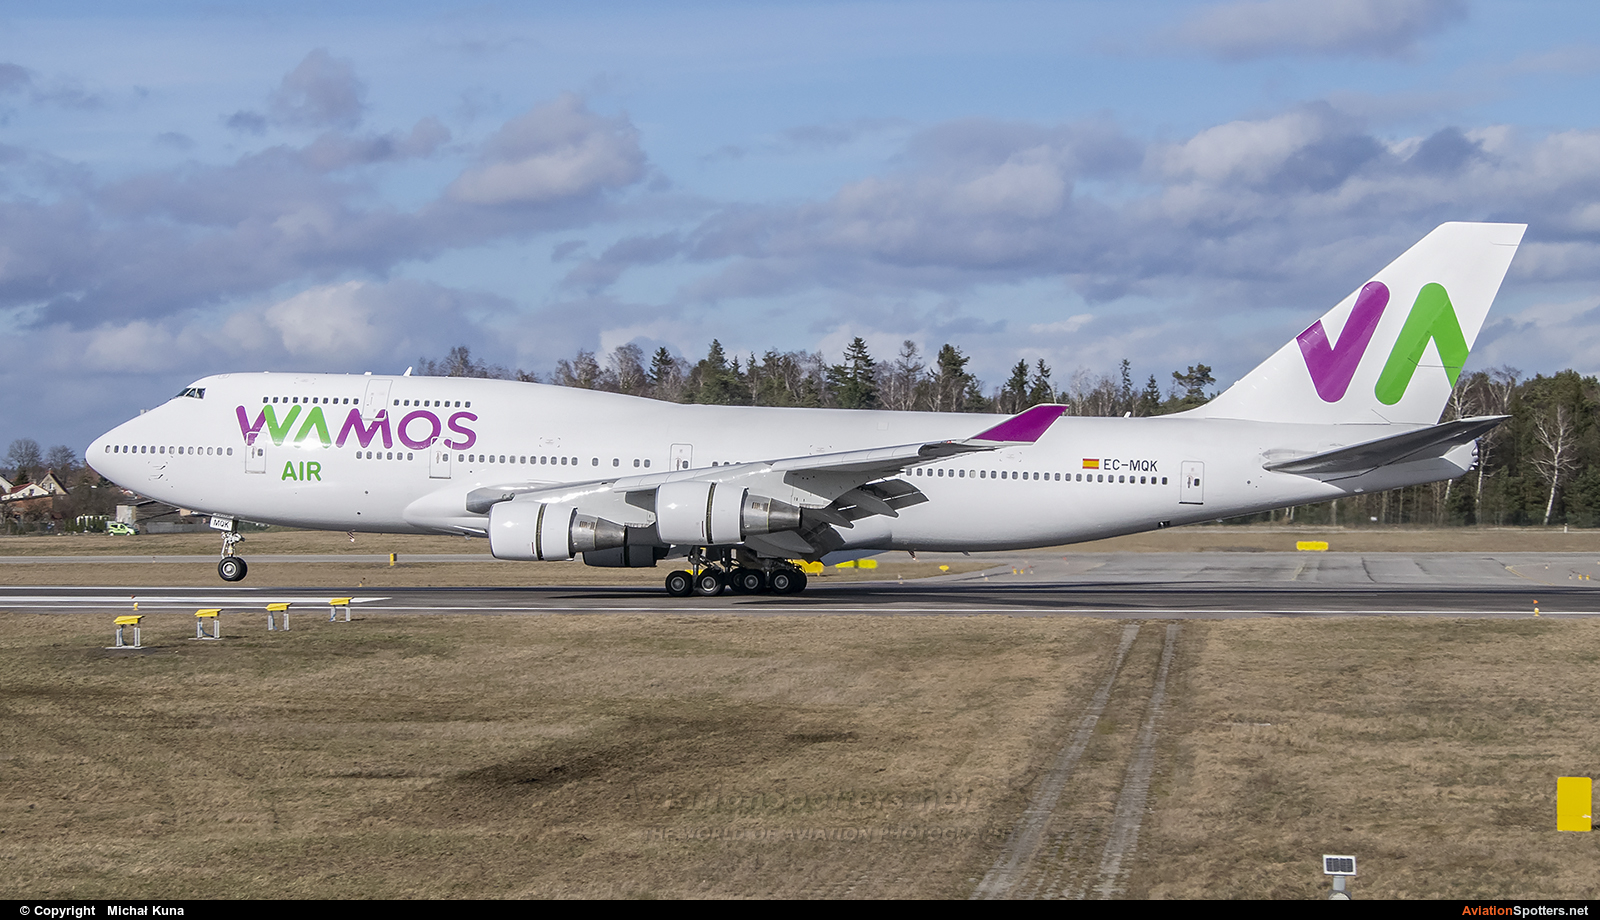 Wamos Air  -  747-400  (EC-MQK) By Michał Kuna (big)